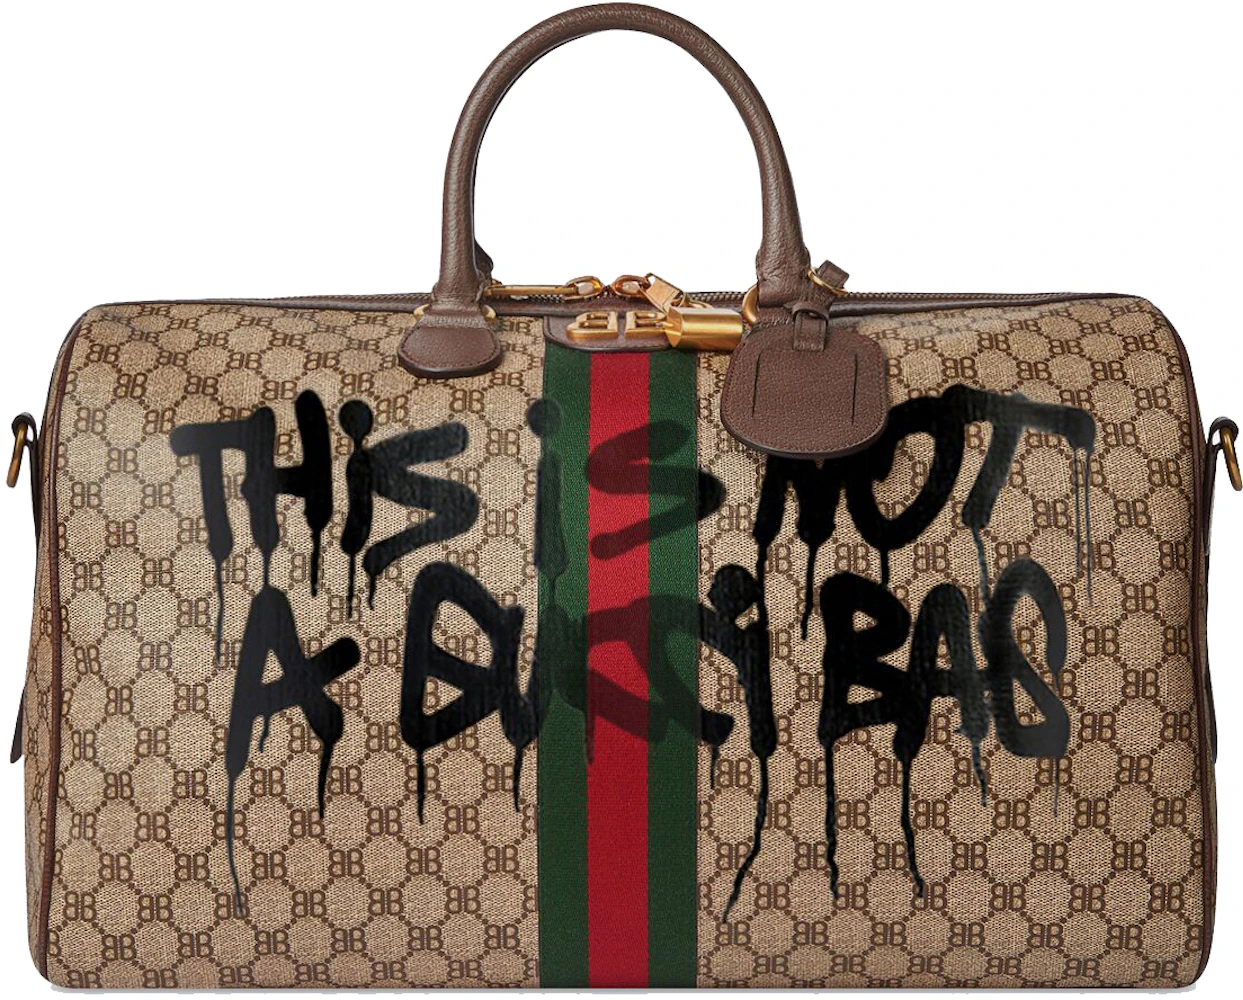 Gucci x Balenciaga bag